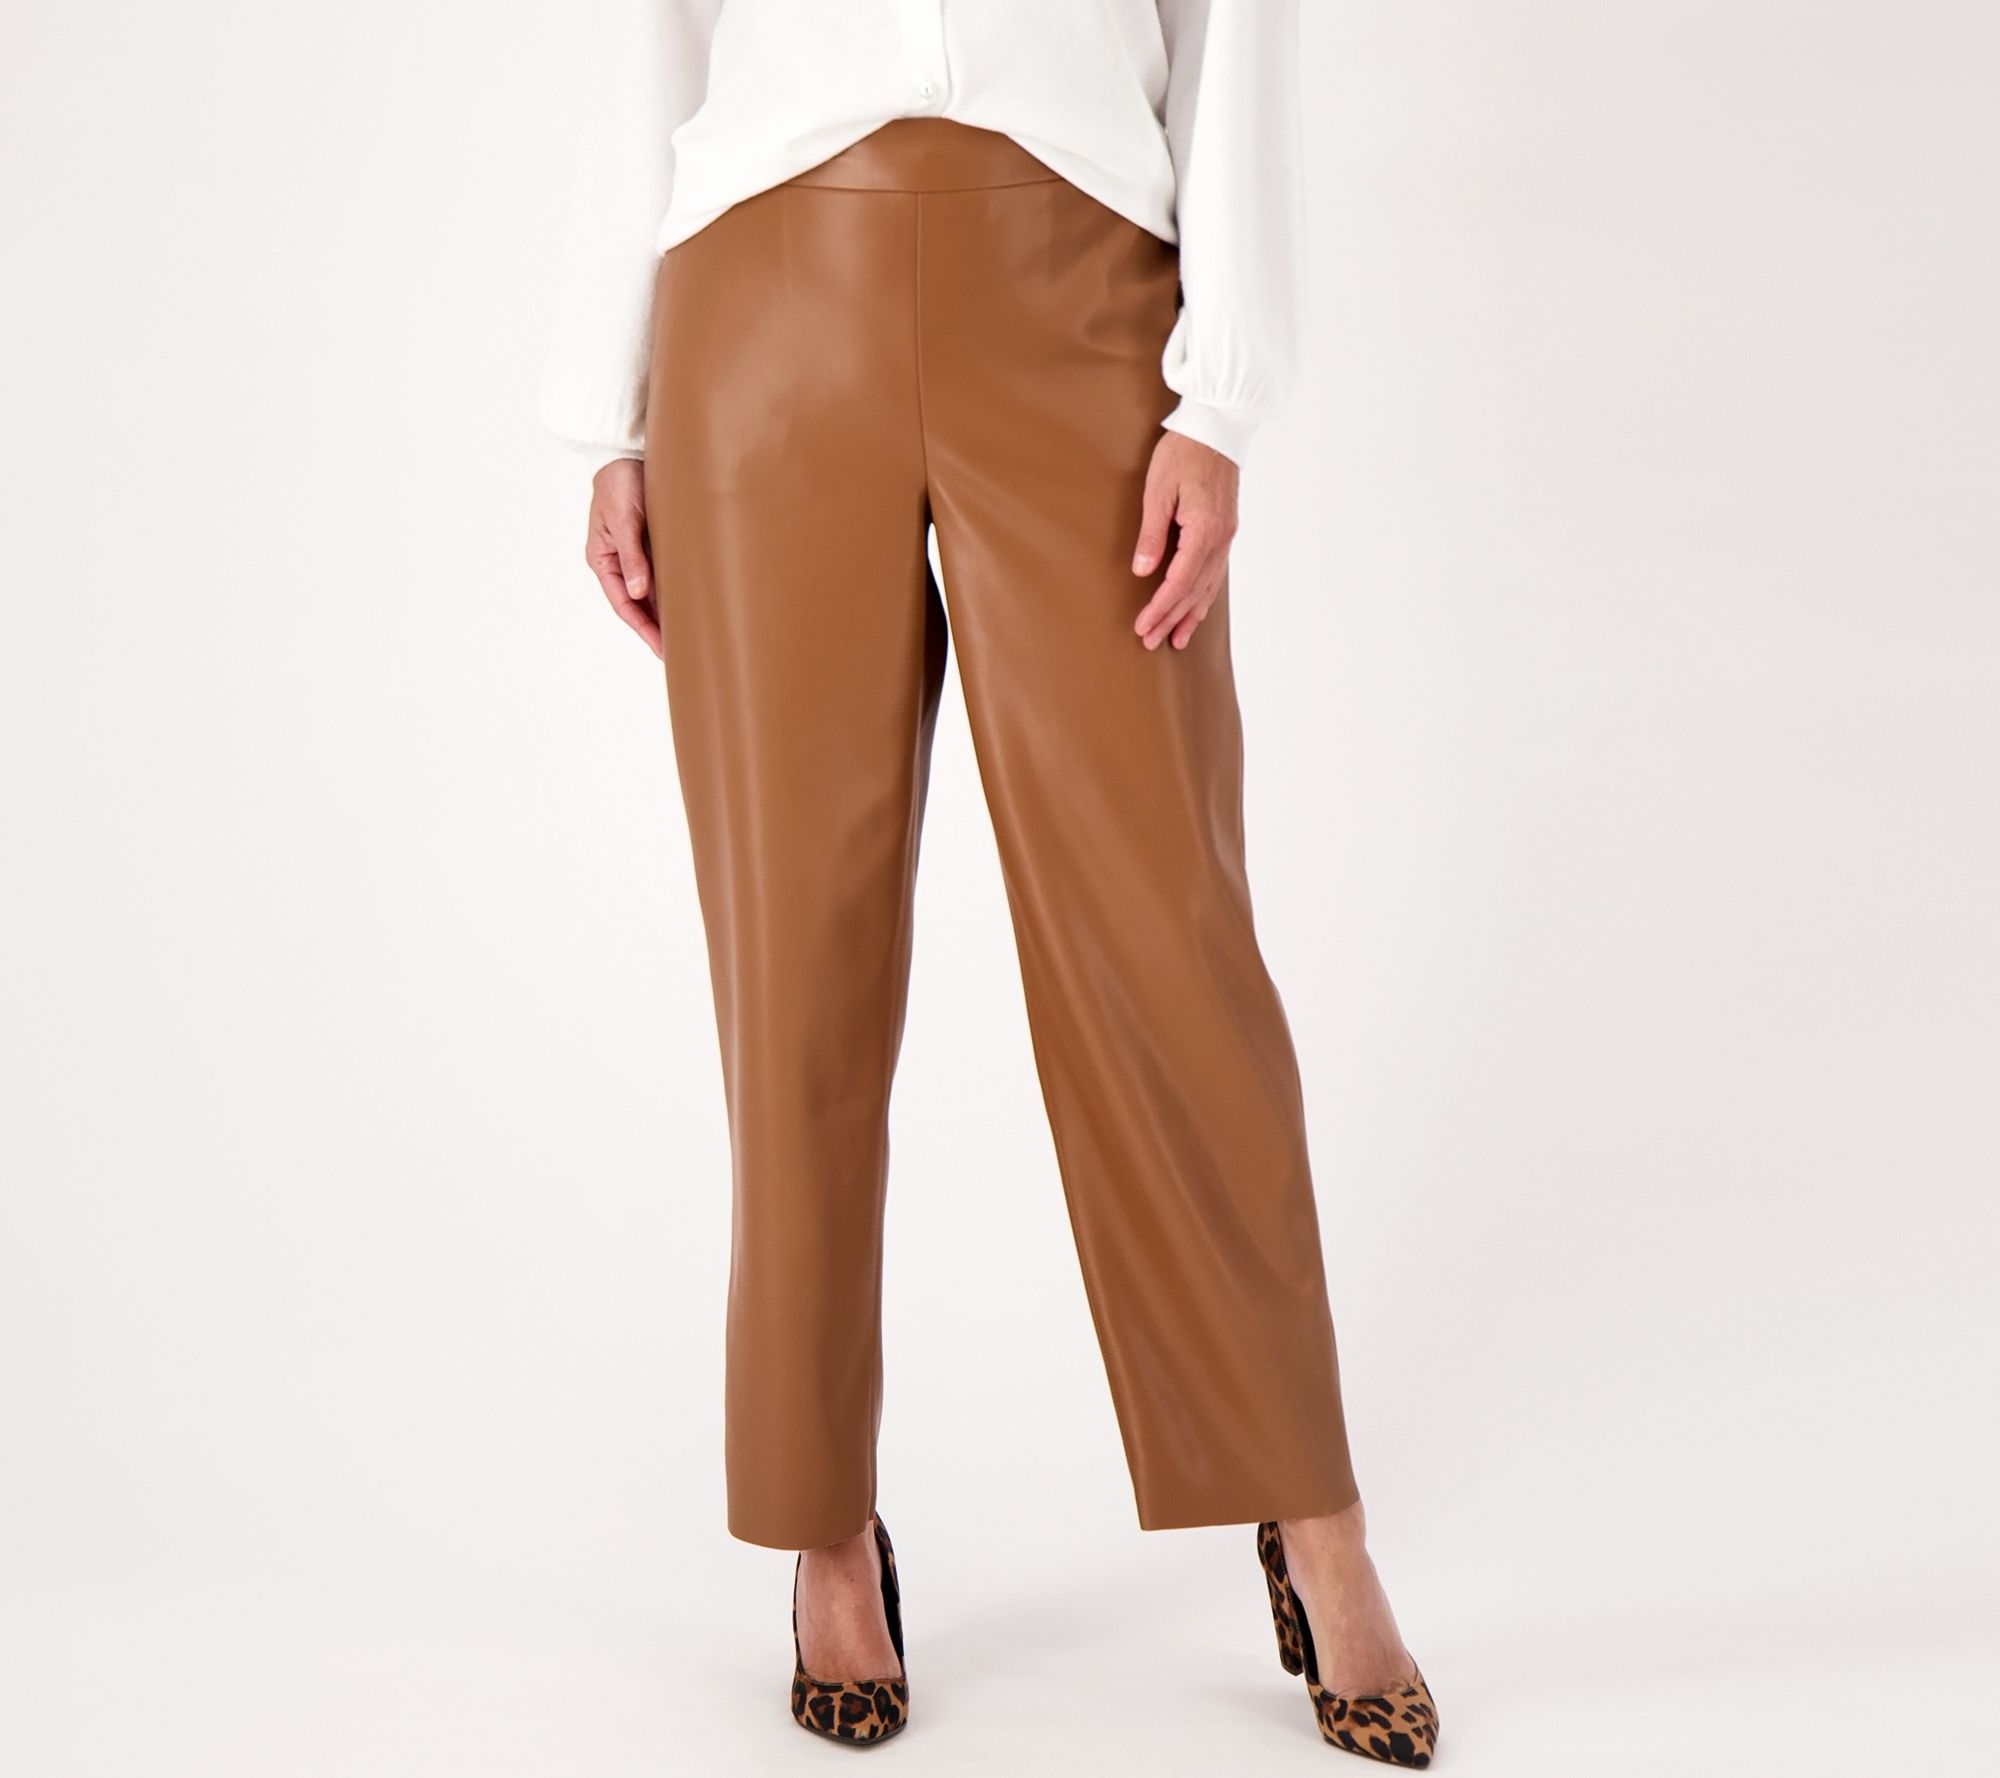 Zara Faux Leather Pants Review (Curvy & Petite Edition) 